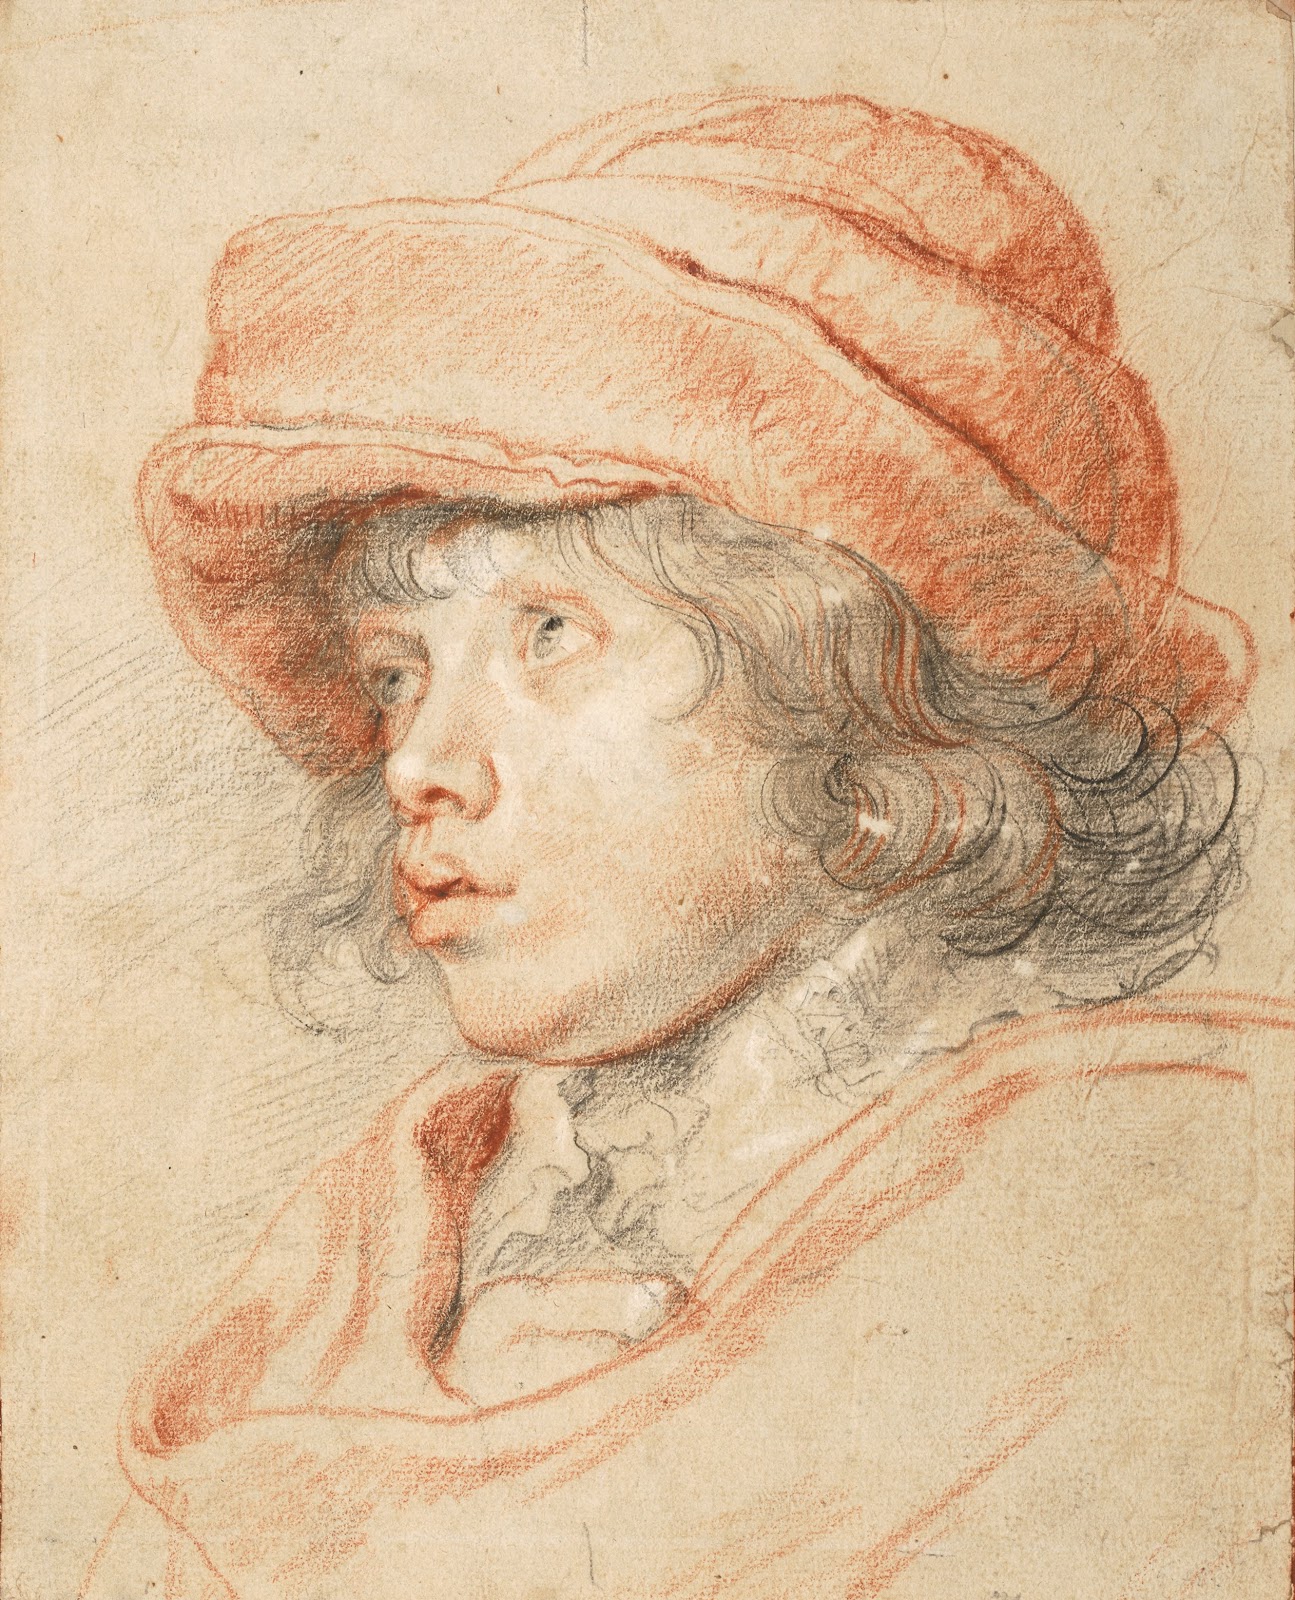 Peter+Paul+Rubens-1577-1640 (99).jpg